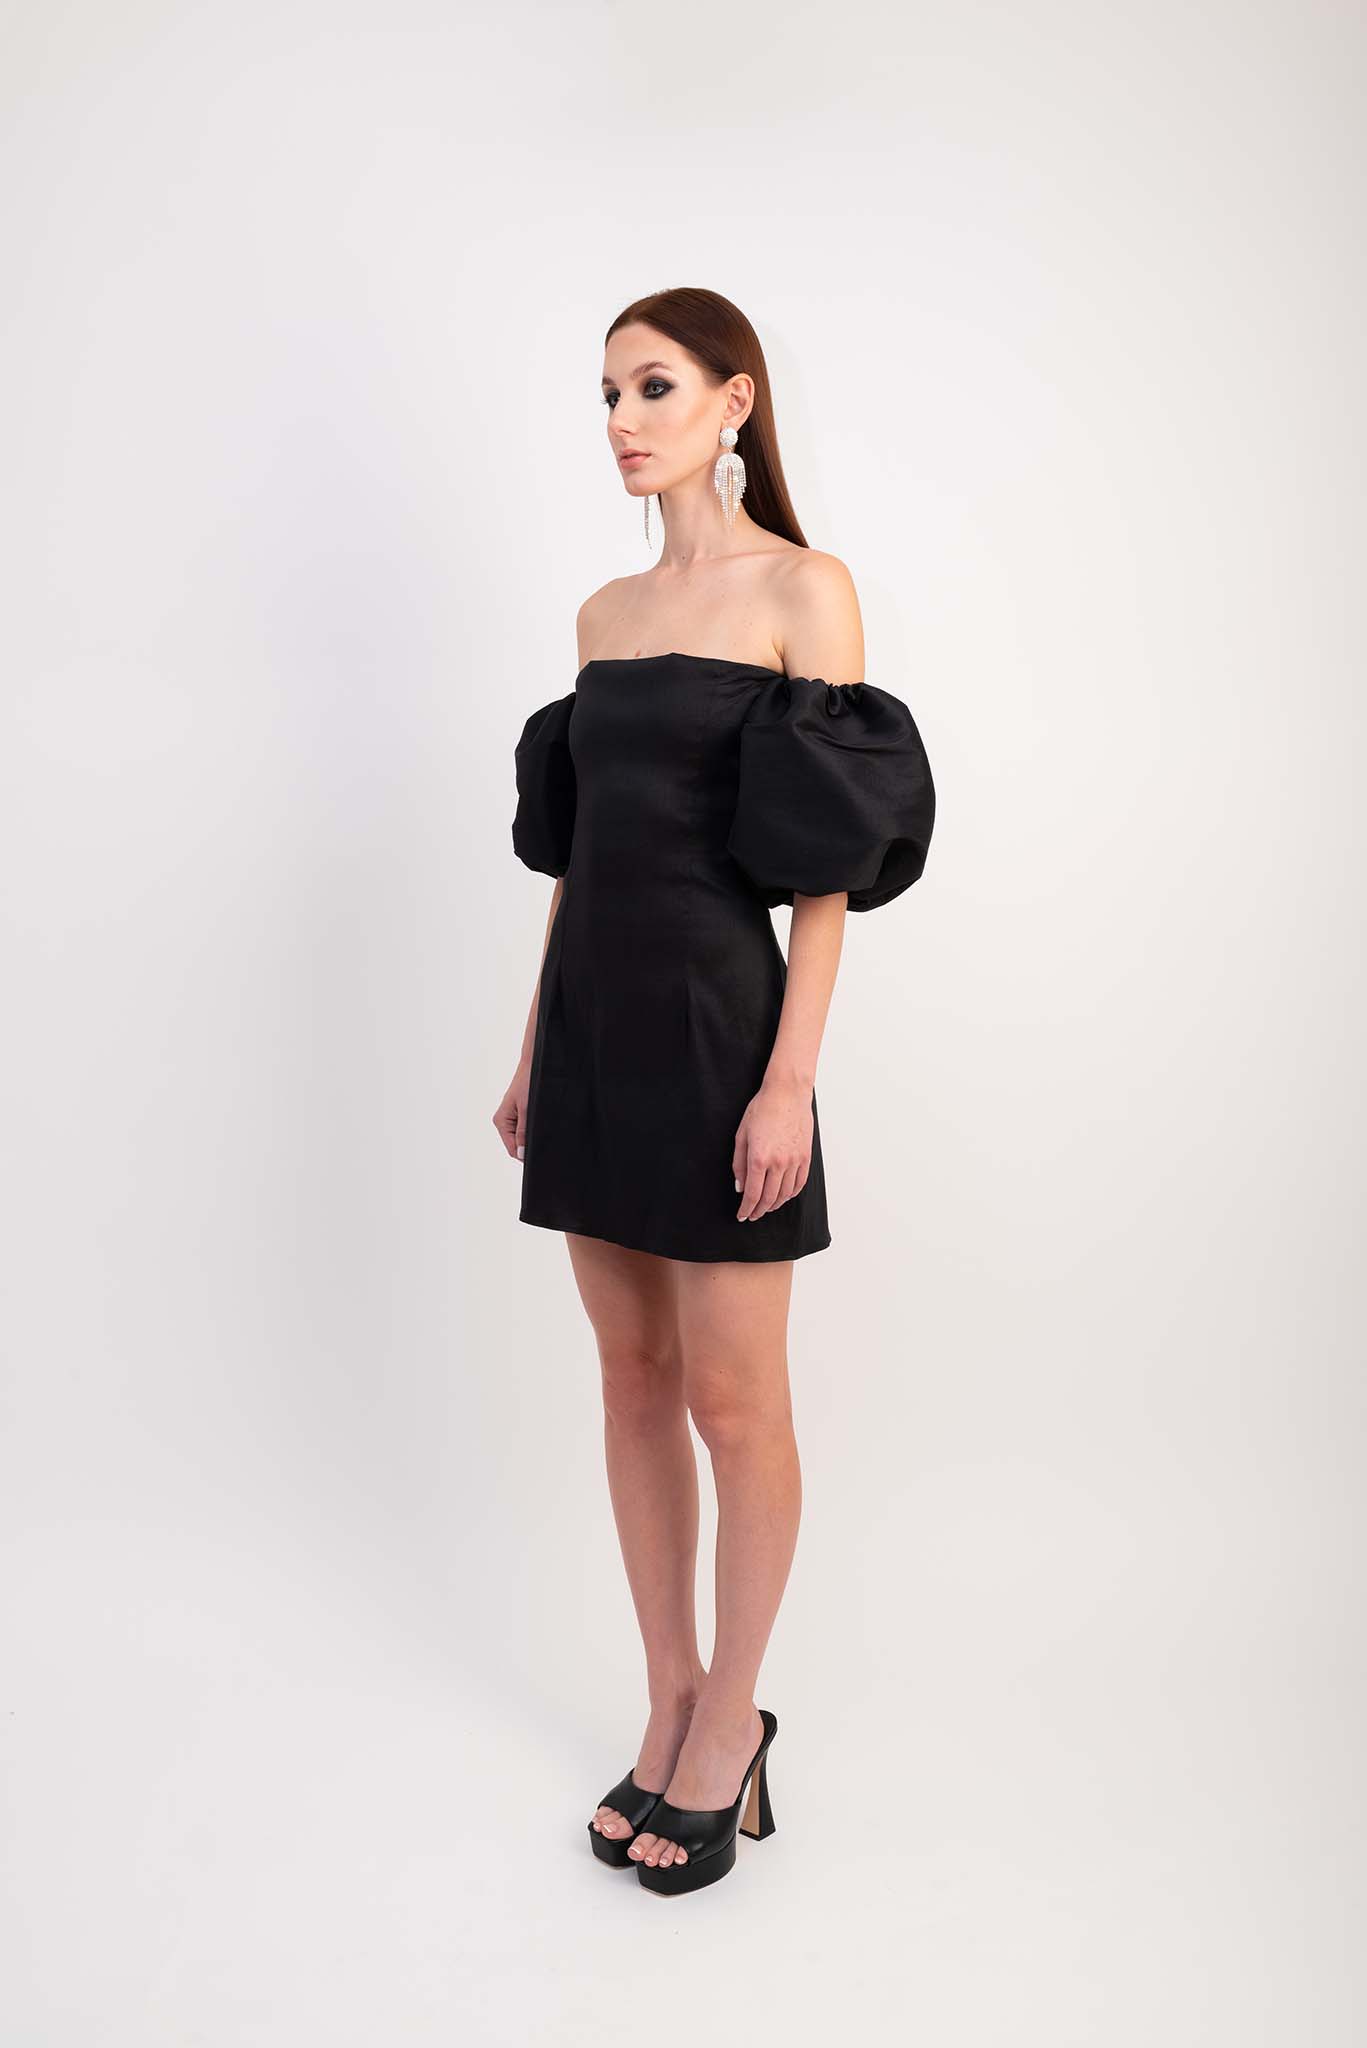 IRA by Irini Charalampous, @irathebrand online shop fashionable ready-to-wear womenswear brand dress HELENA colour black high heels Cyprus Greece